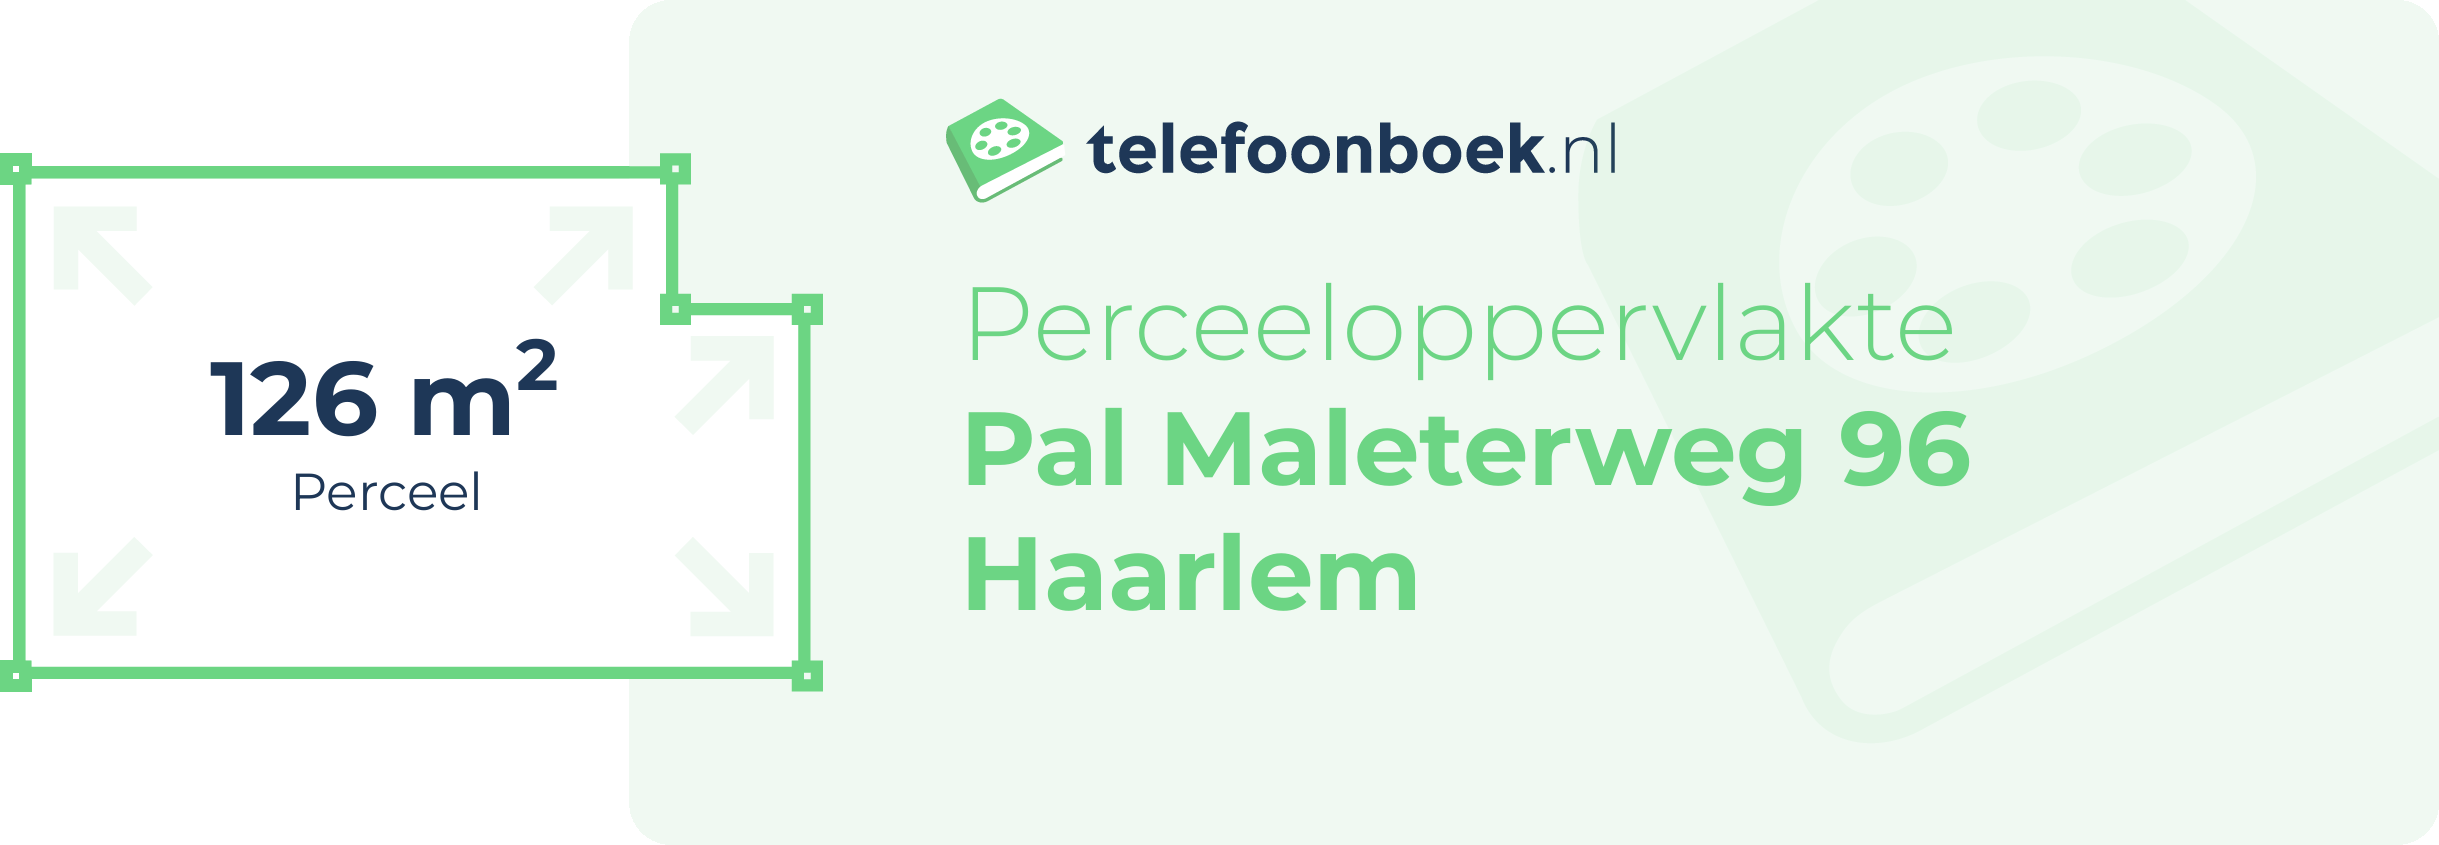 Perceeloppervlakte Pal Maleterweg 96 Haarlem